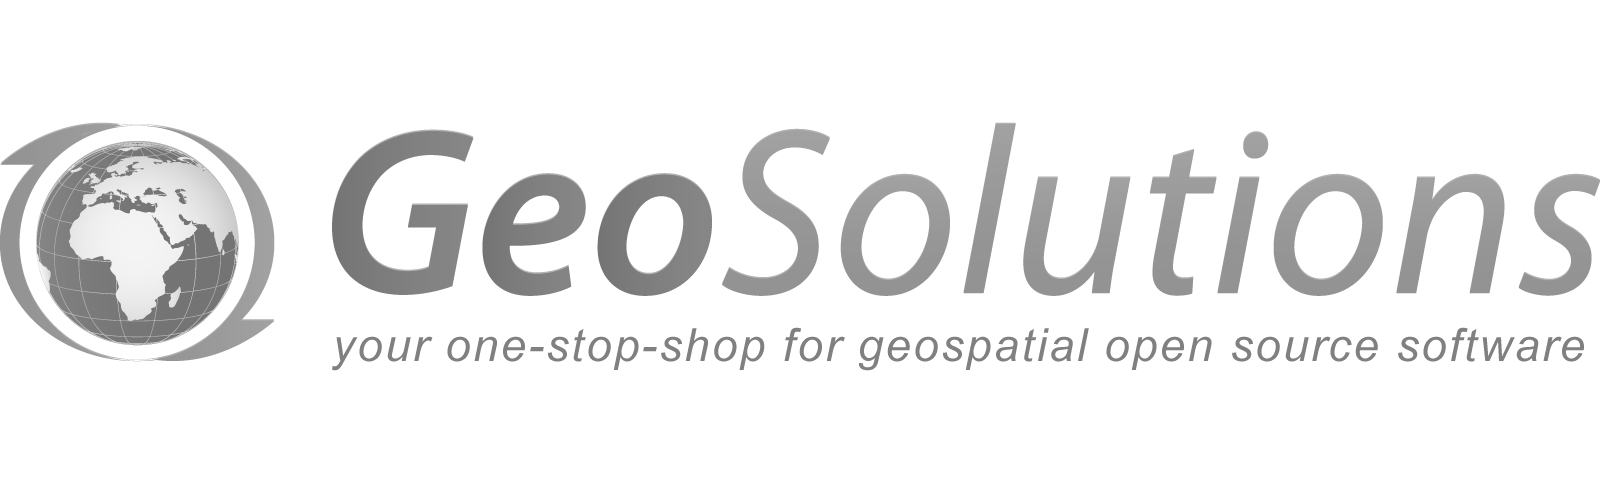 GeoSolutions Logo